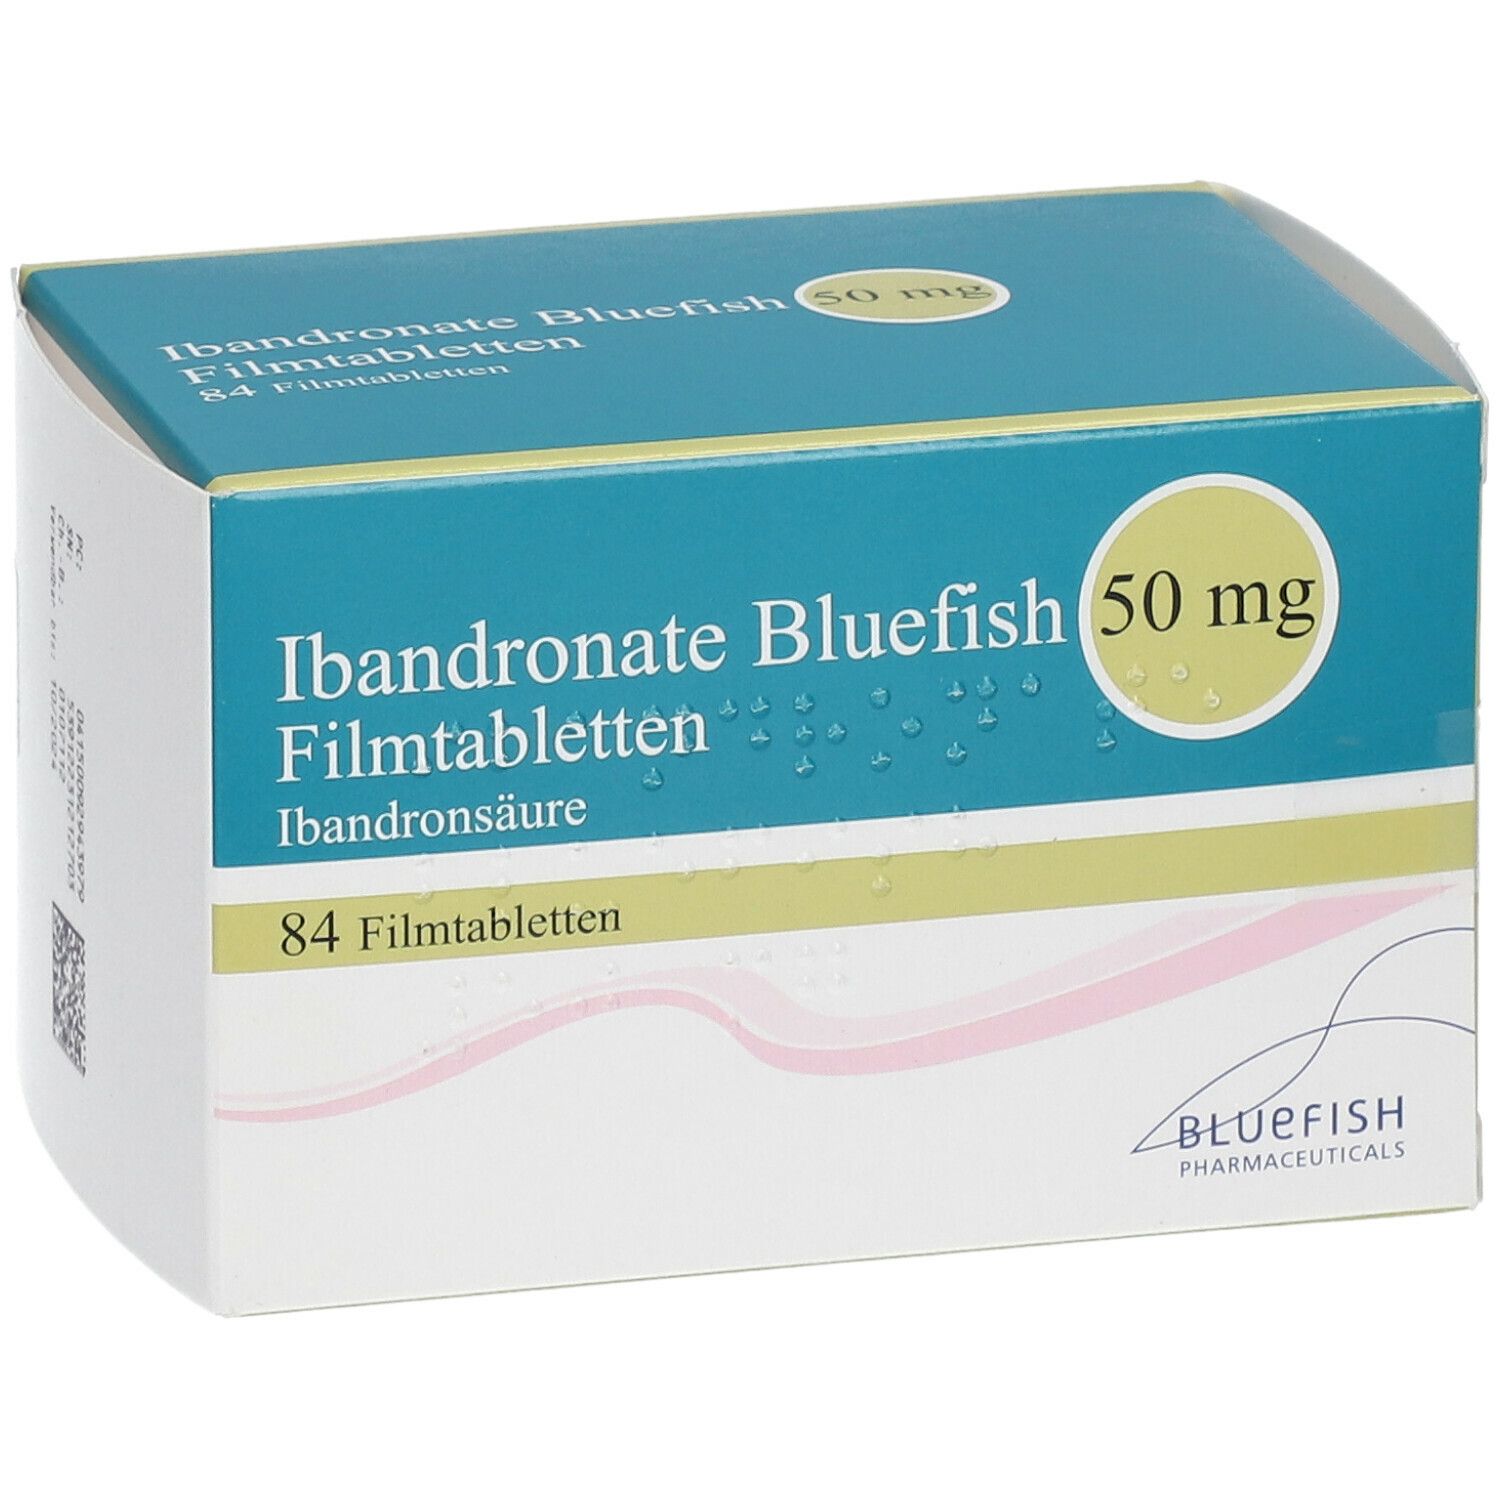 Ibandronate Bluefish 50 mg